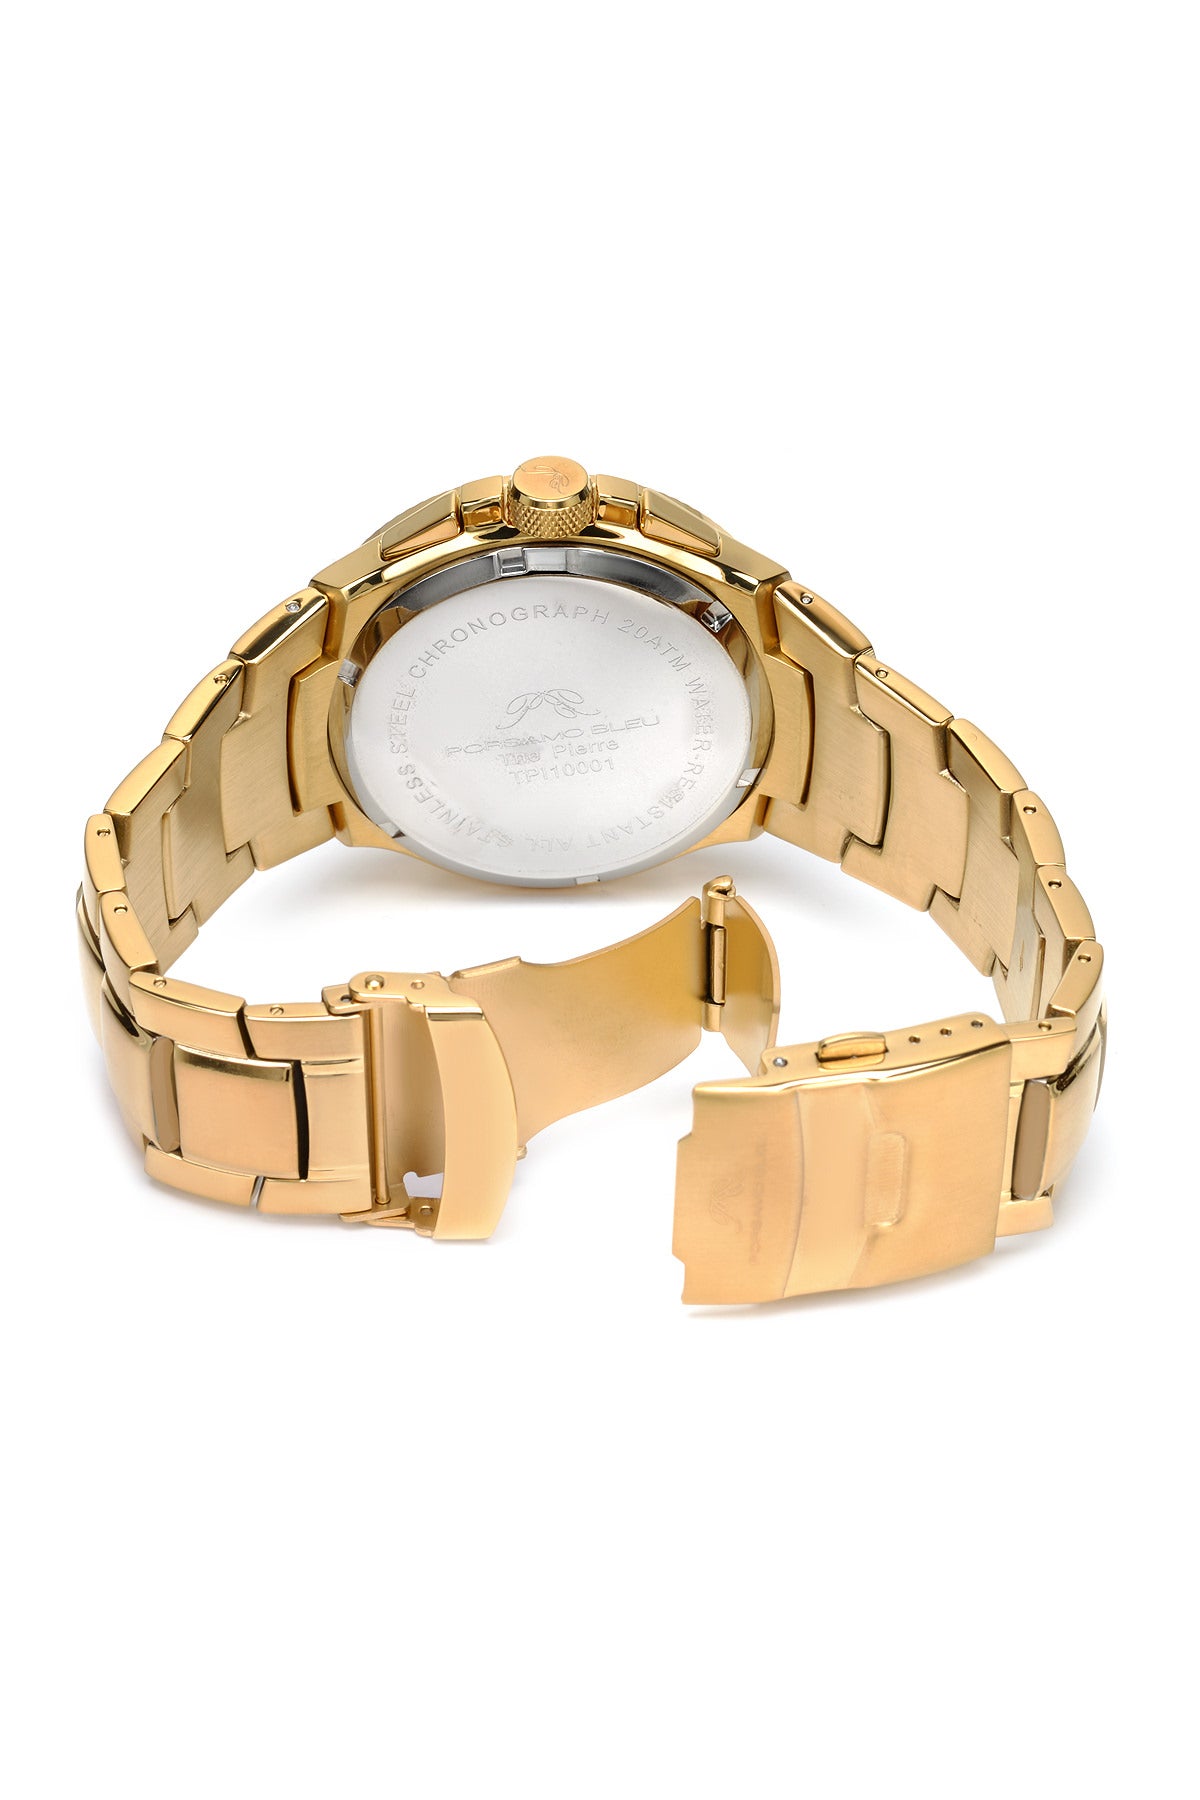 Porsamo Bleu Pierre luxury chronograph men's stainless steel watch, gold tone and blue 253BPIS